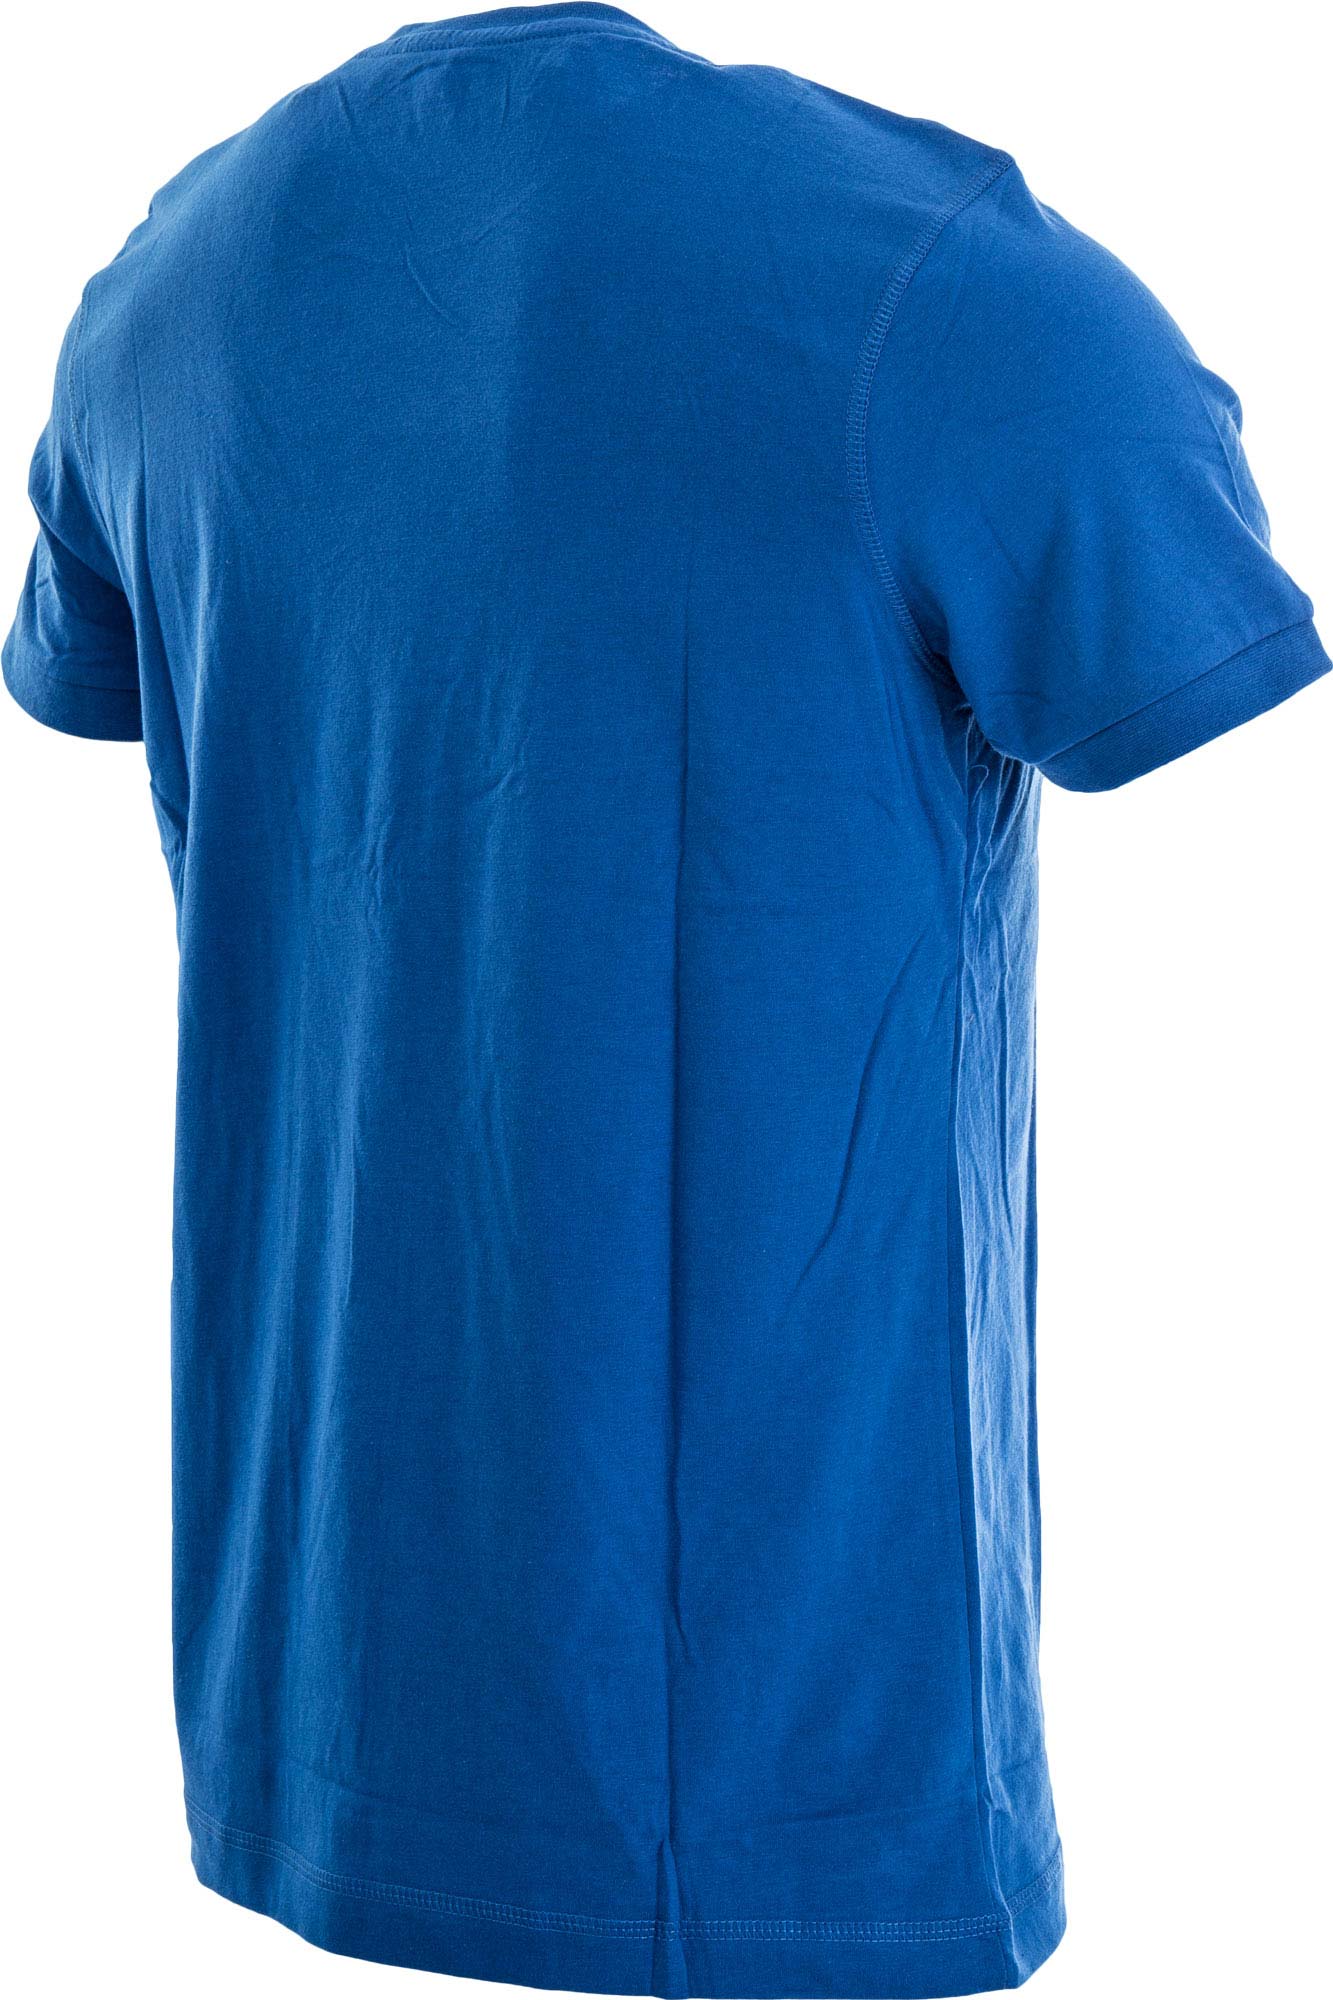 T-SHIRT TEAMCUP ITA LINE - Pánske tričko